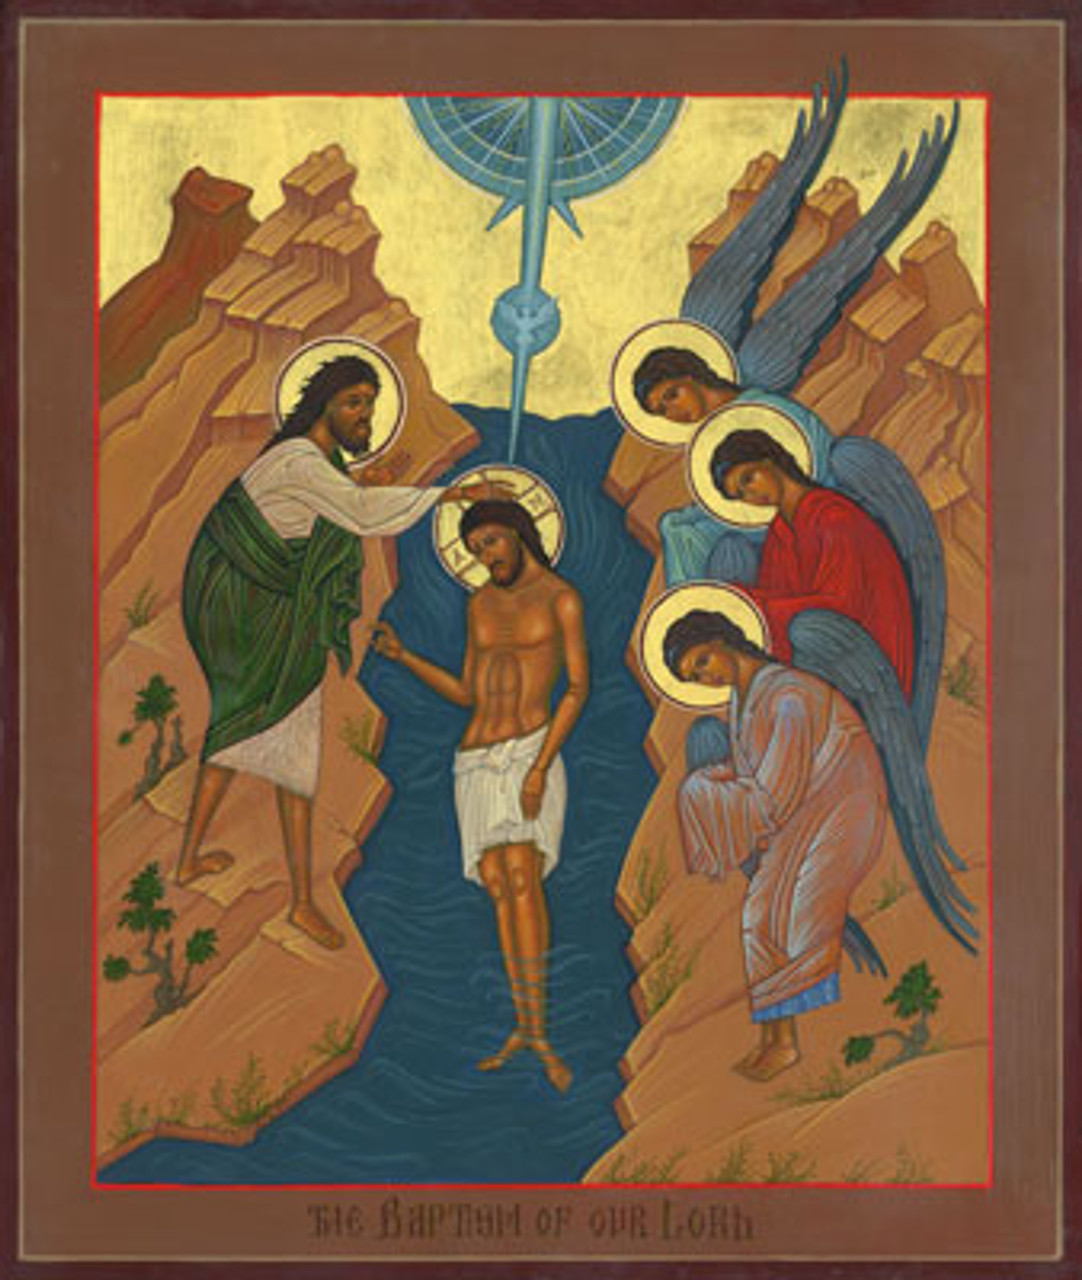 baptism of christ icon